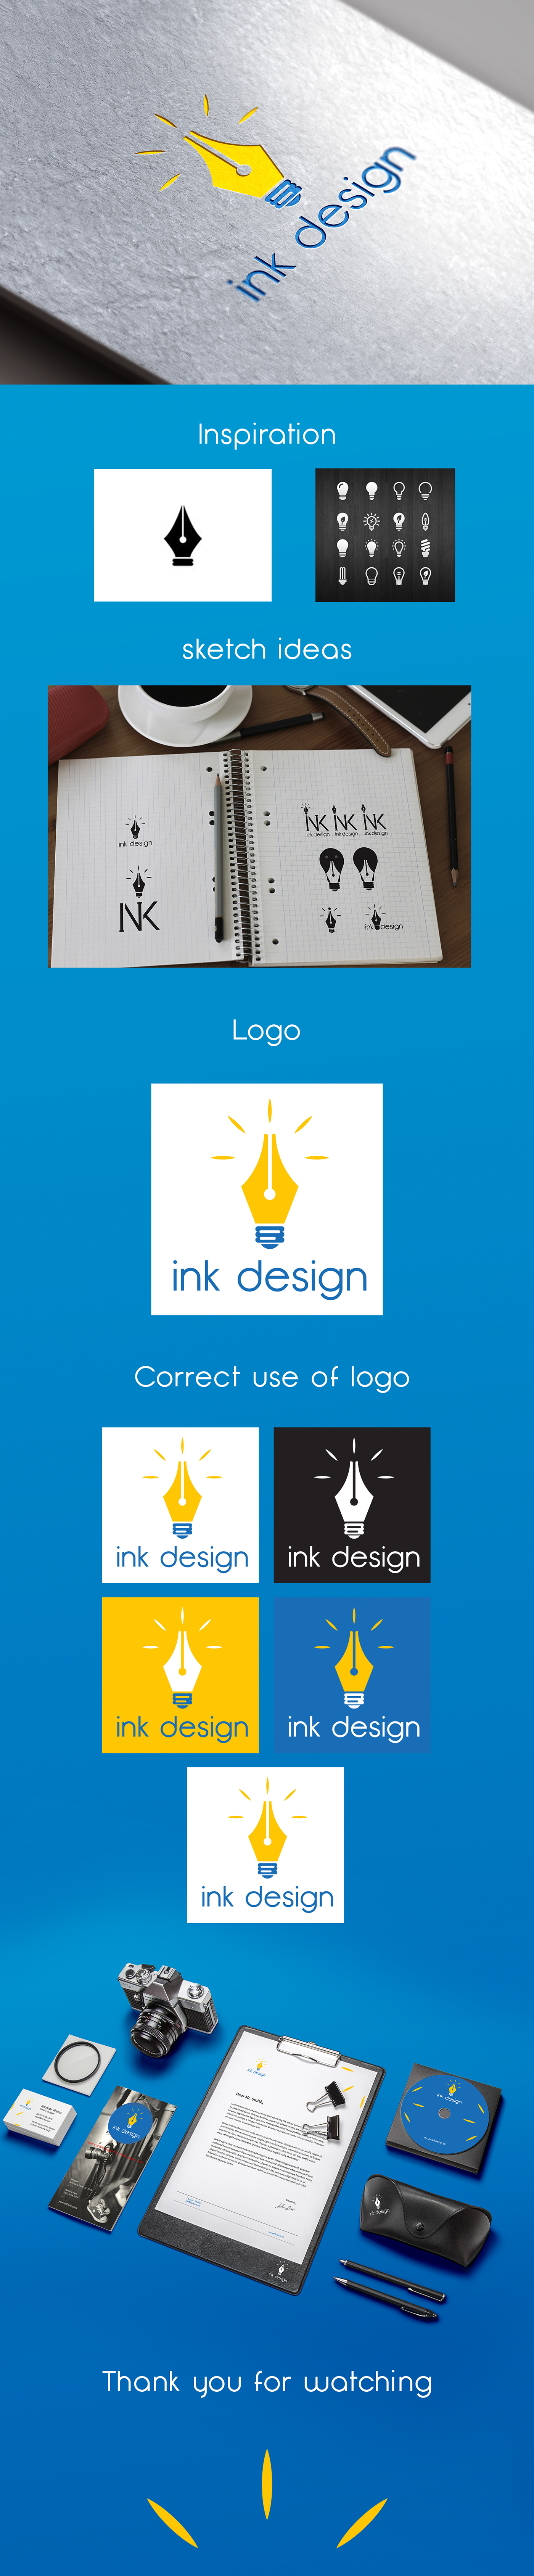 ink design logo identity idea